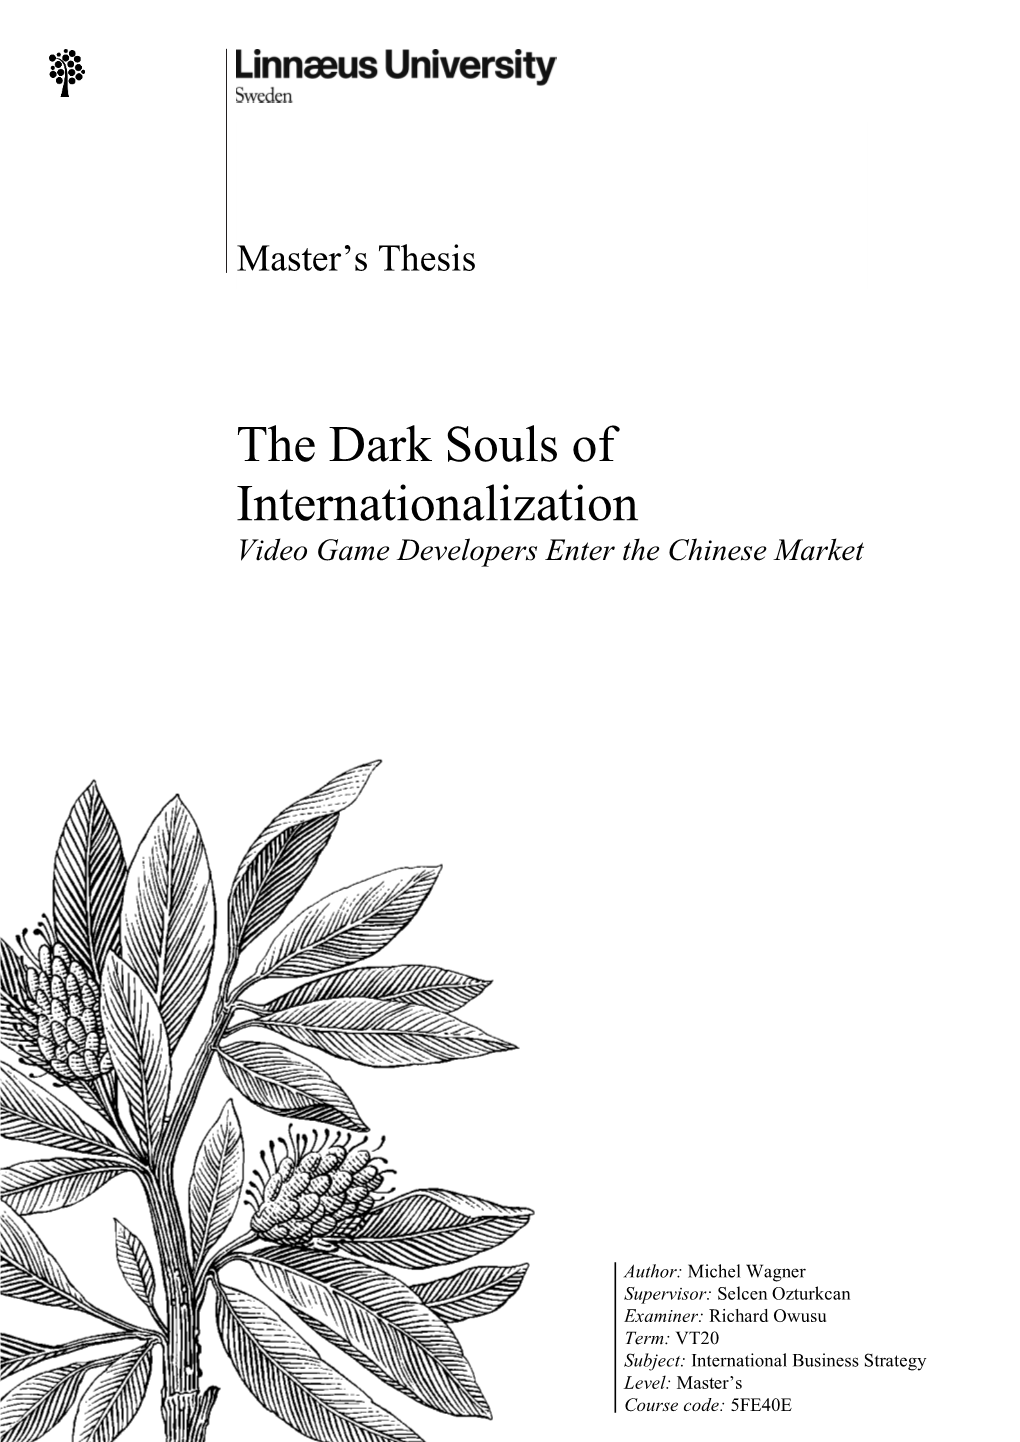 The Dark Souls of Internationalization